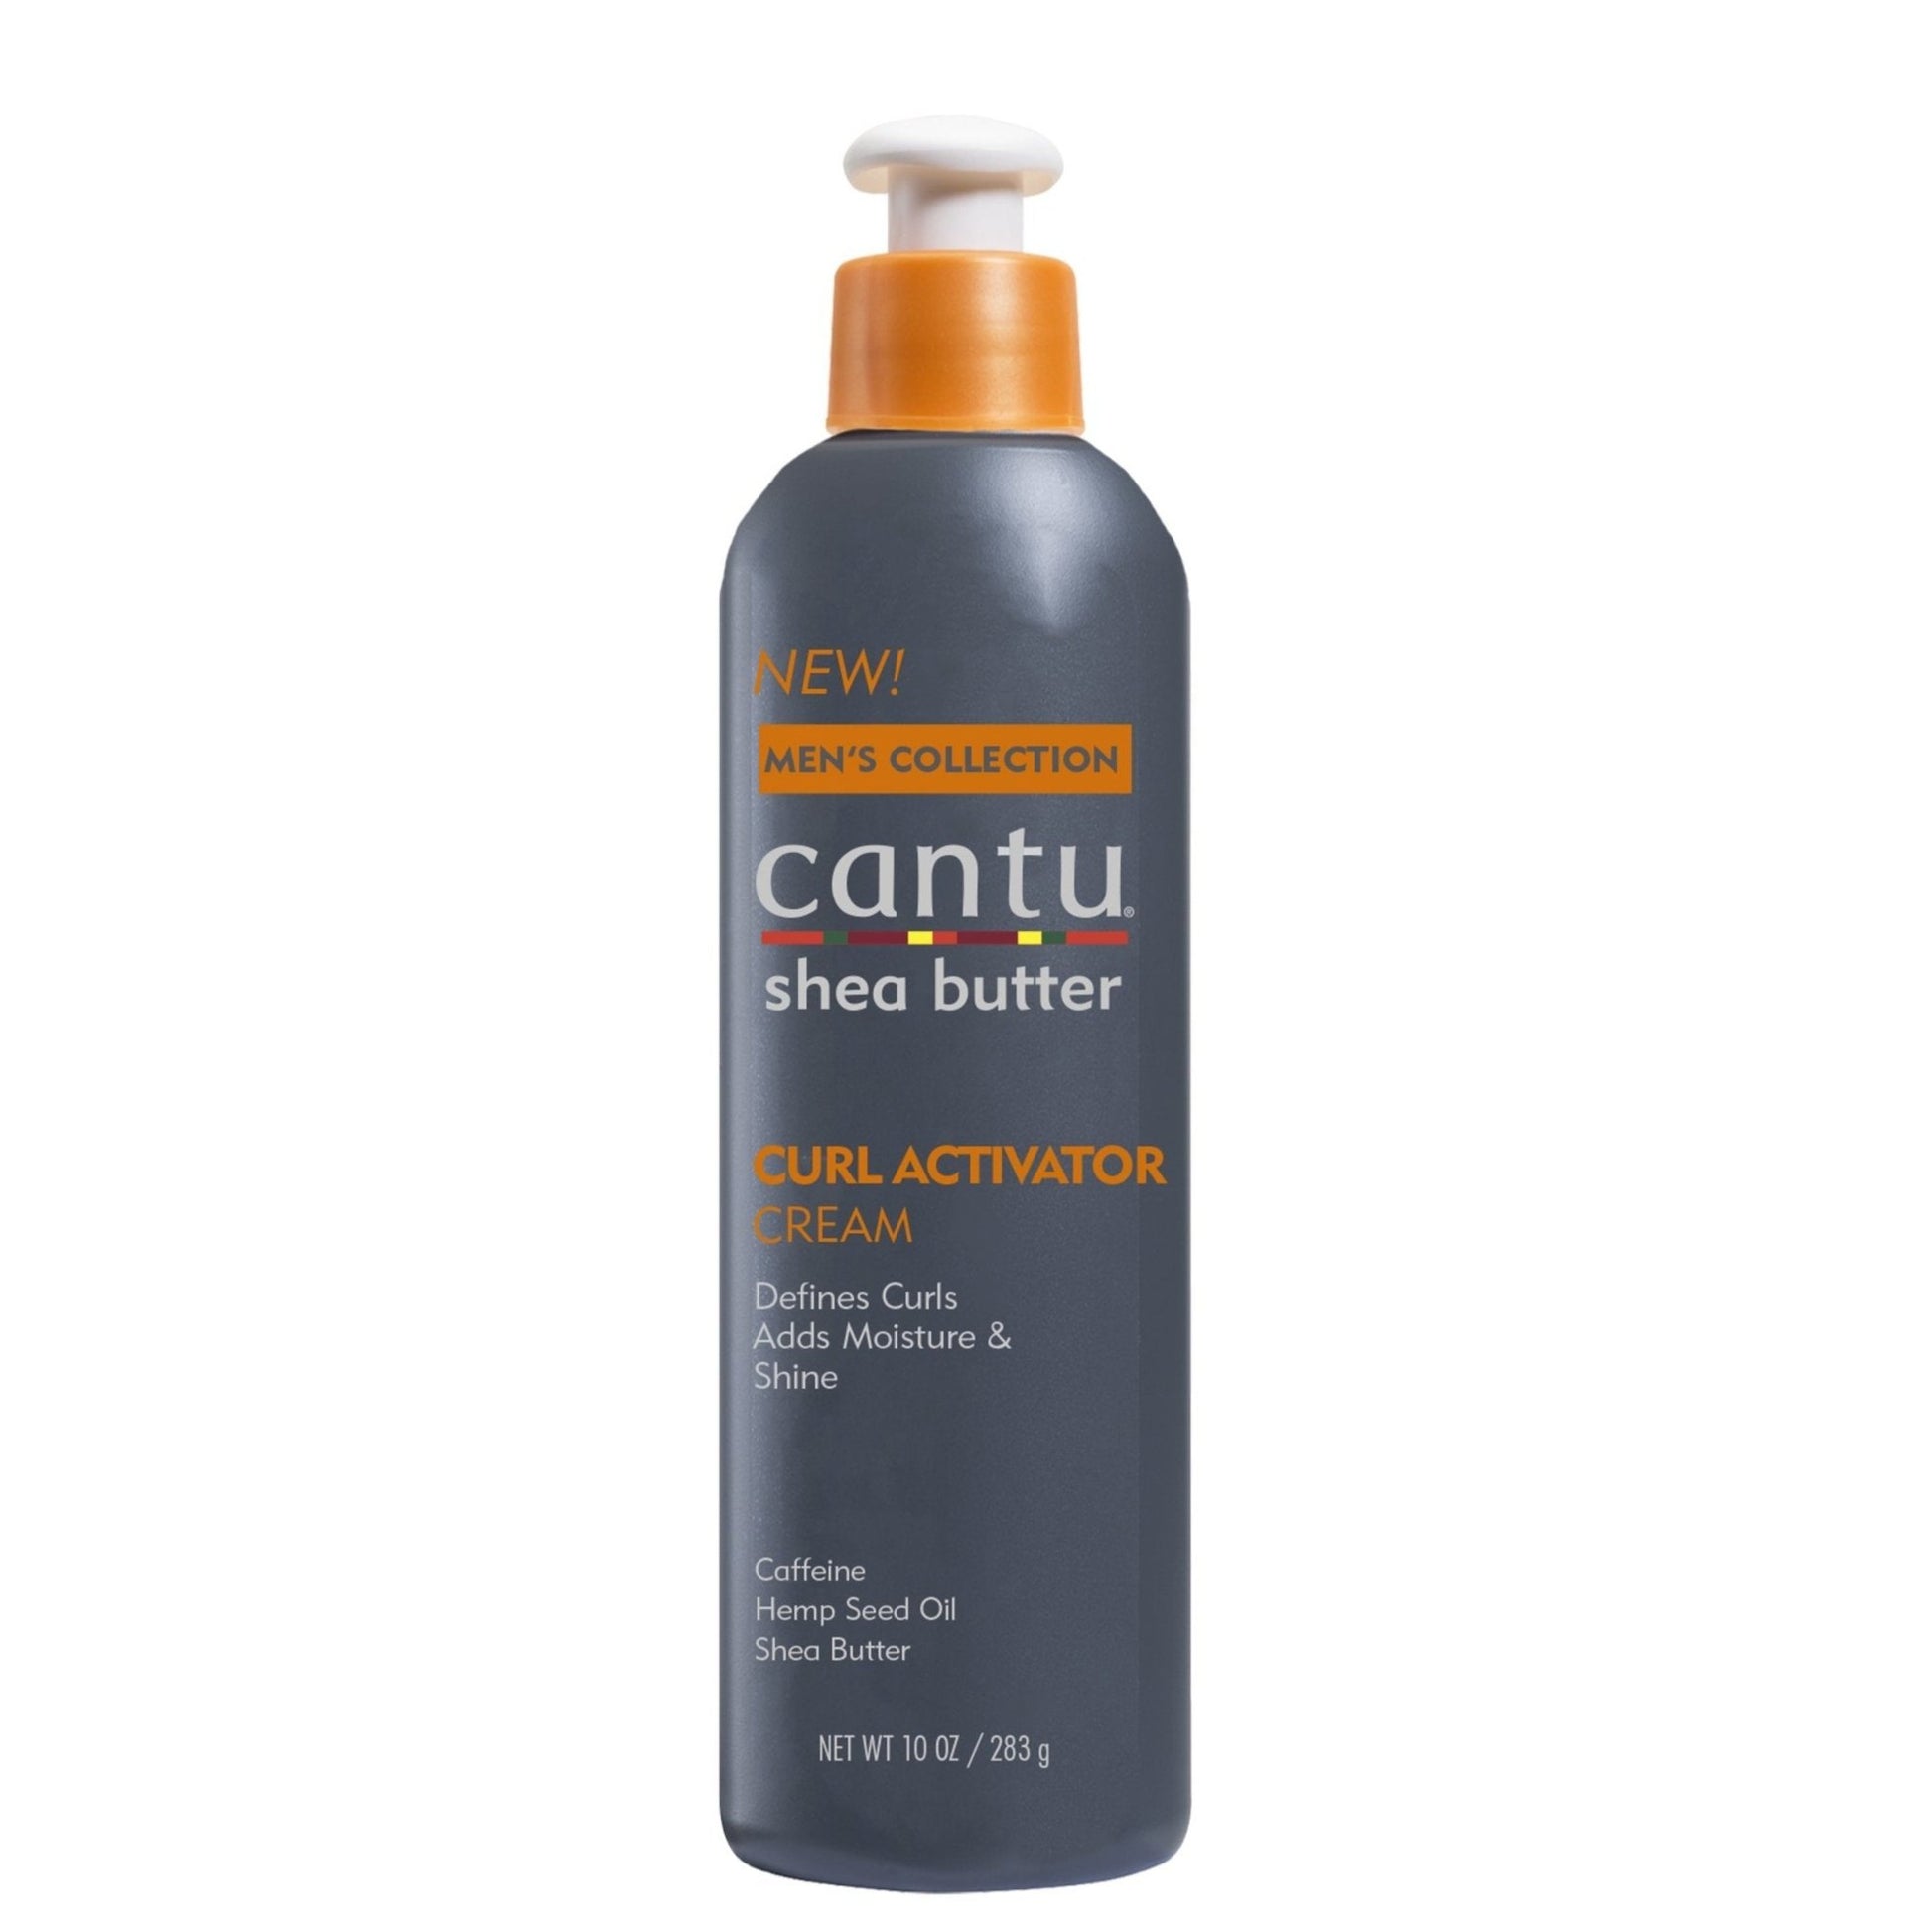 Cantu-Cantu Men's Curl Activator Cream with Caffeine, Hemp Seed Oil, and Shea Butter, 295mL - Brandat Outlet